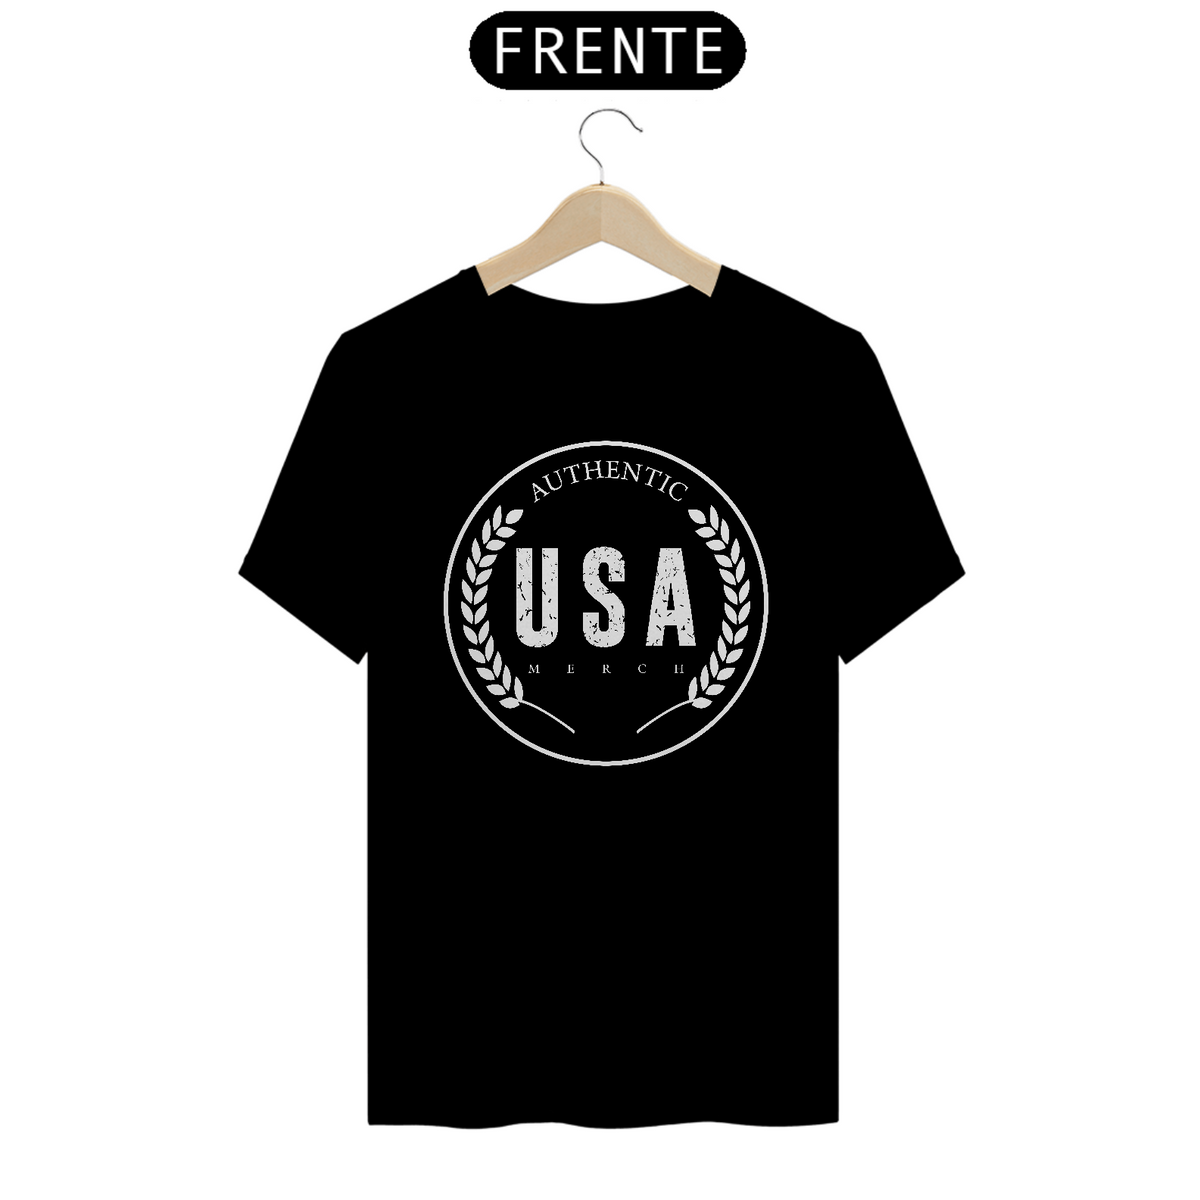 Nome do produto: Camiseta Authentic USA